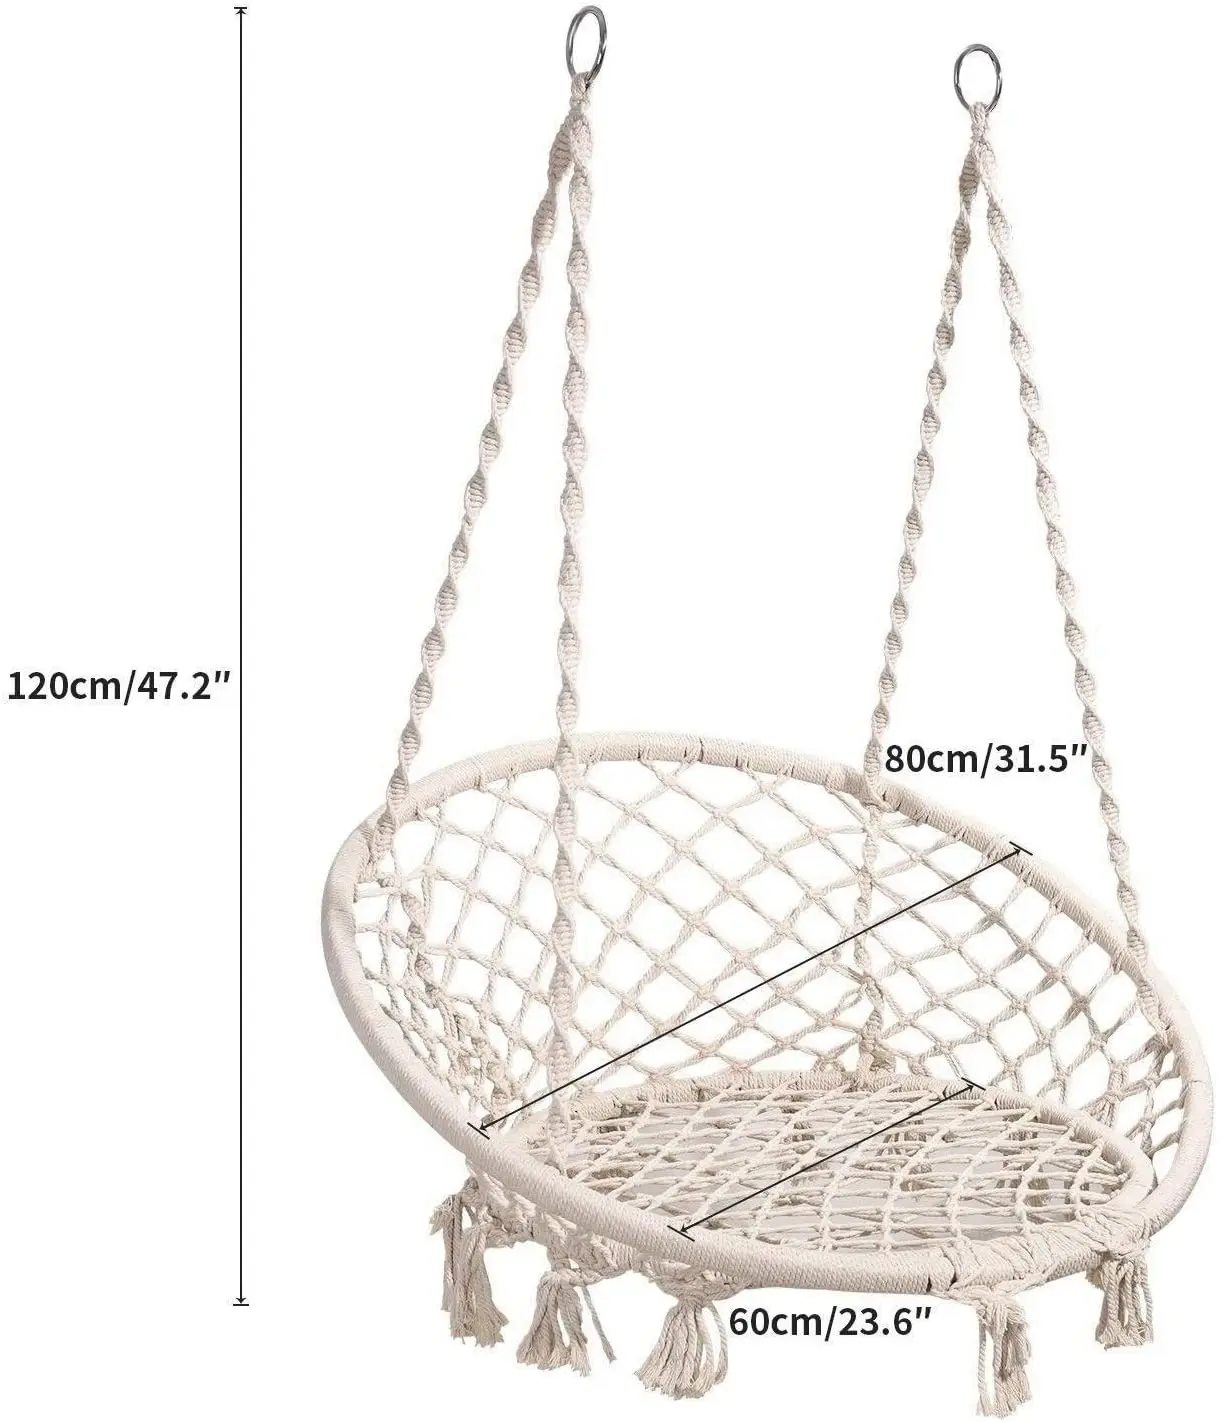 Wholesale Basket Steel Wicker Rattan Swing Seat Furniture Outdoor Patio Swing Chair Hanging Garden Swing Chair